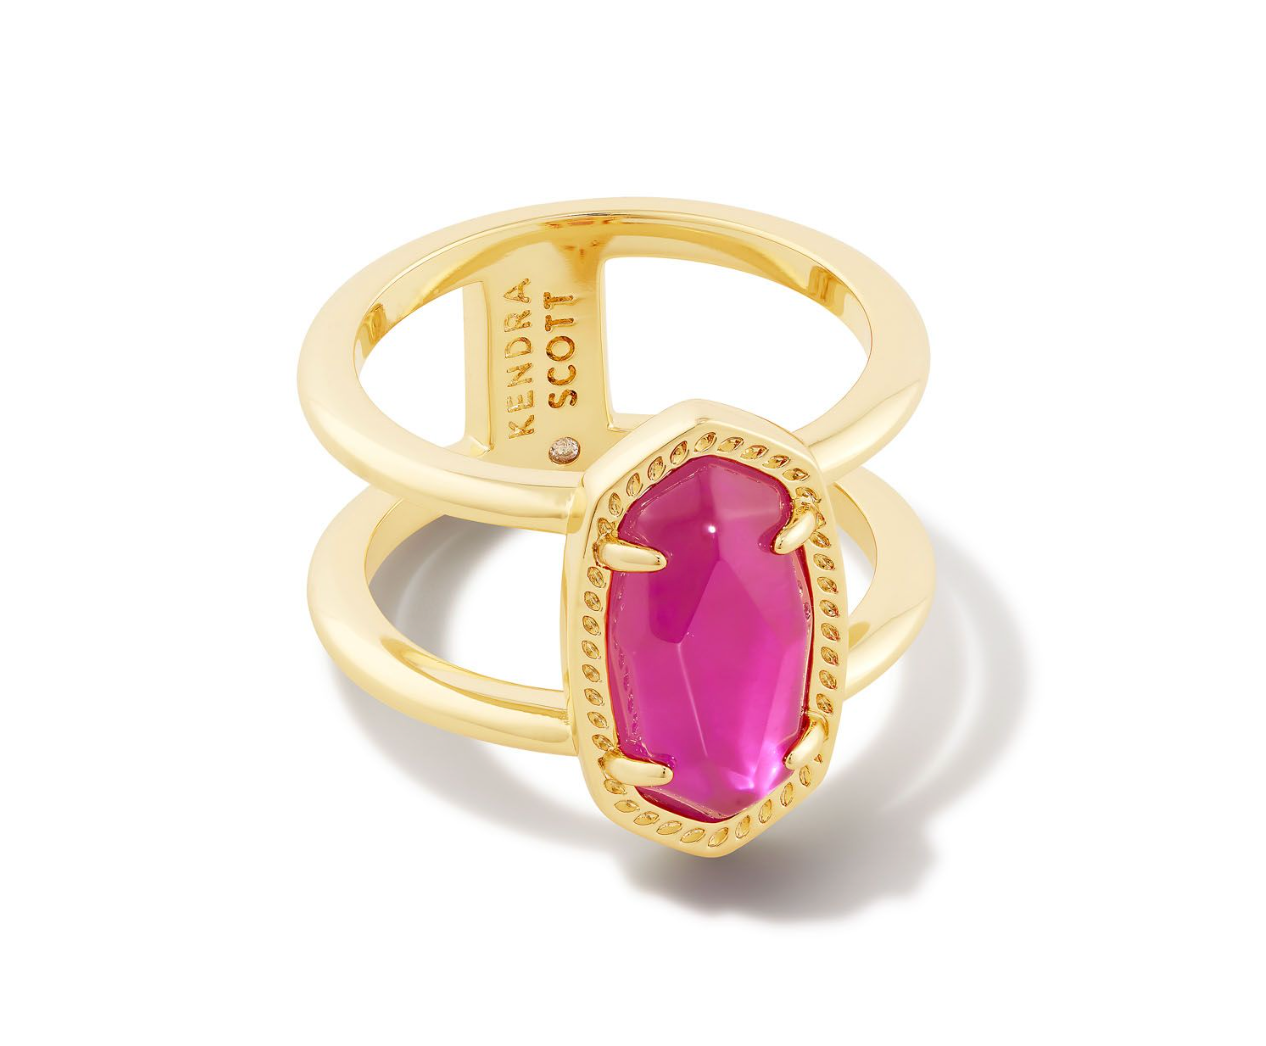 Elyse Gold Ring in Azalea Illusion | KENDRA SCOTT - The Street Boutique 